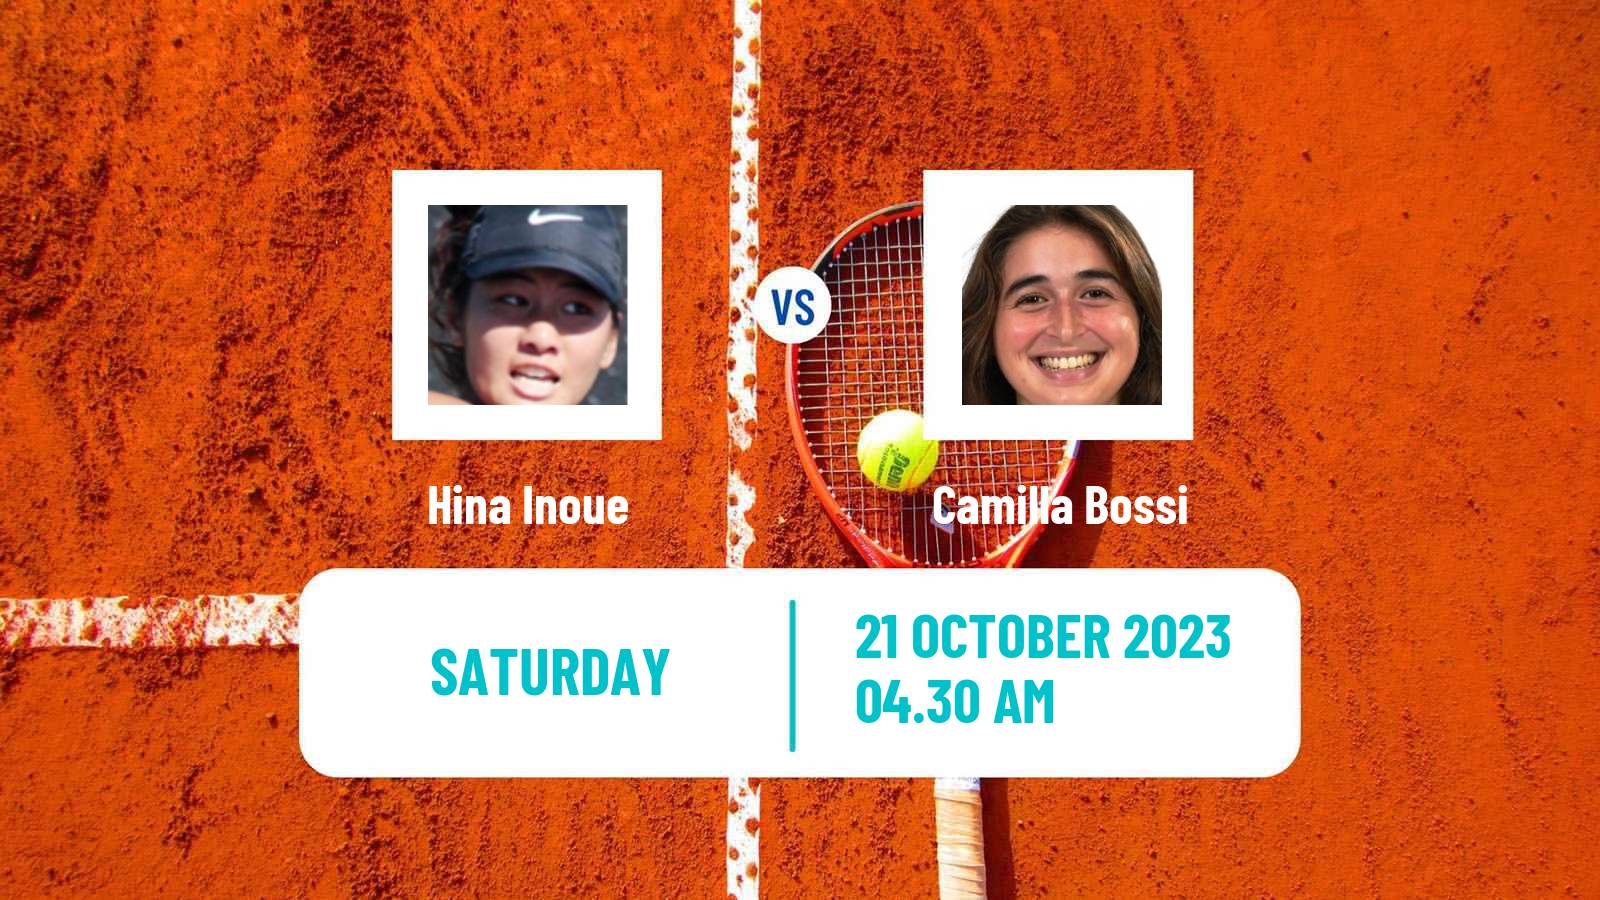 Tennis ITF W15 Monastir 37 Women Hina Inoue - Camilla Bossi